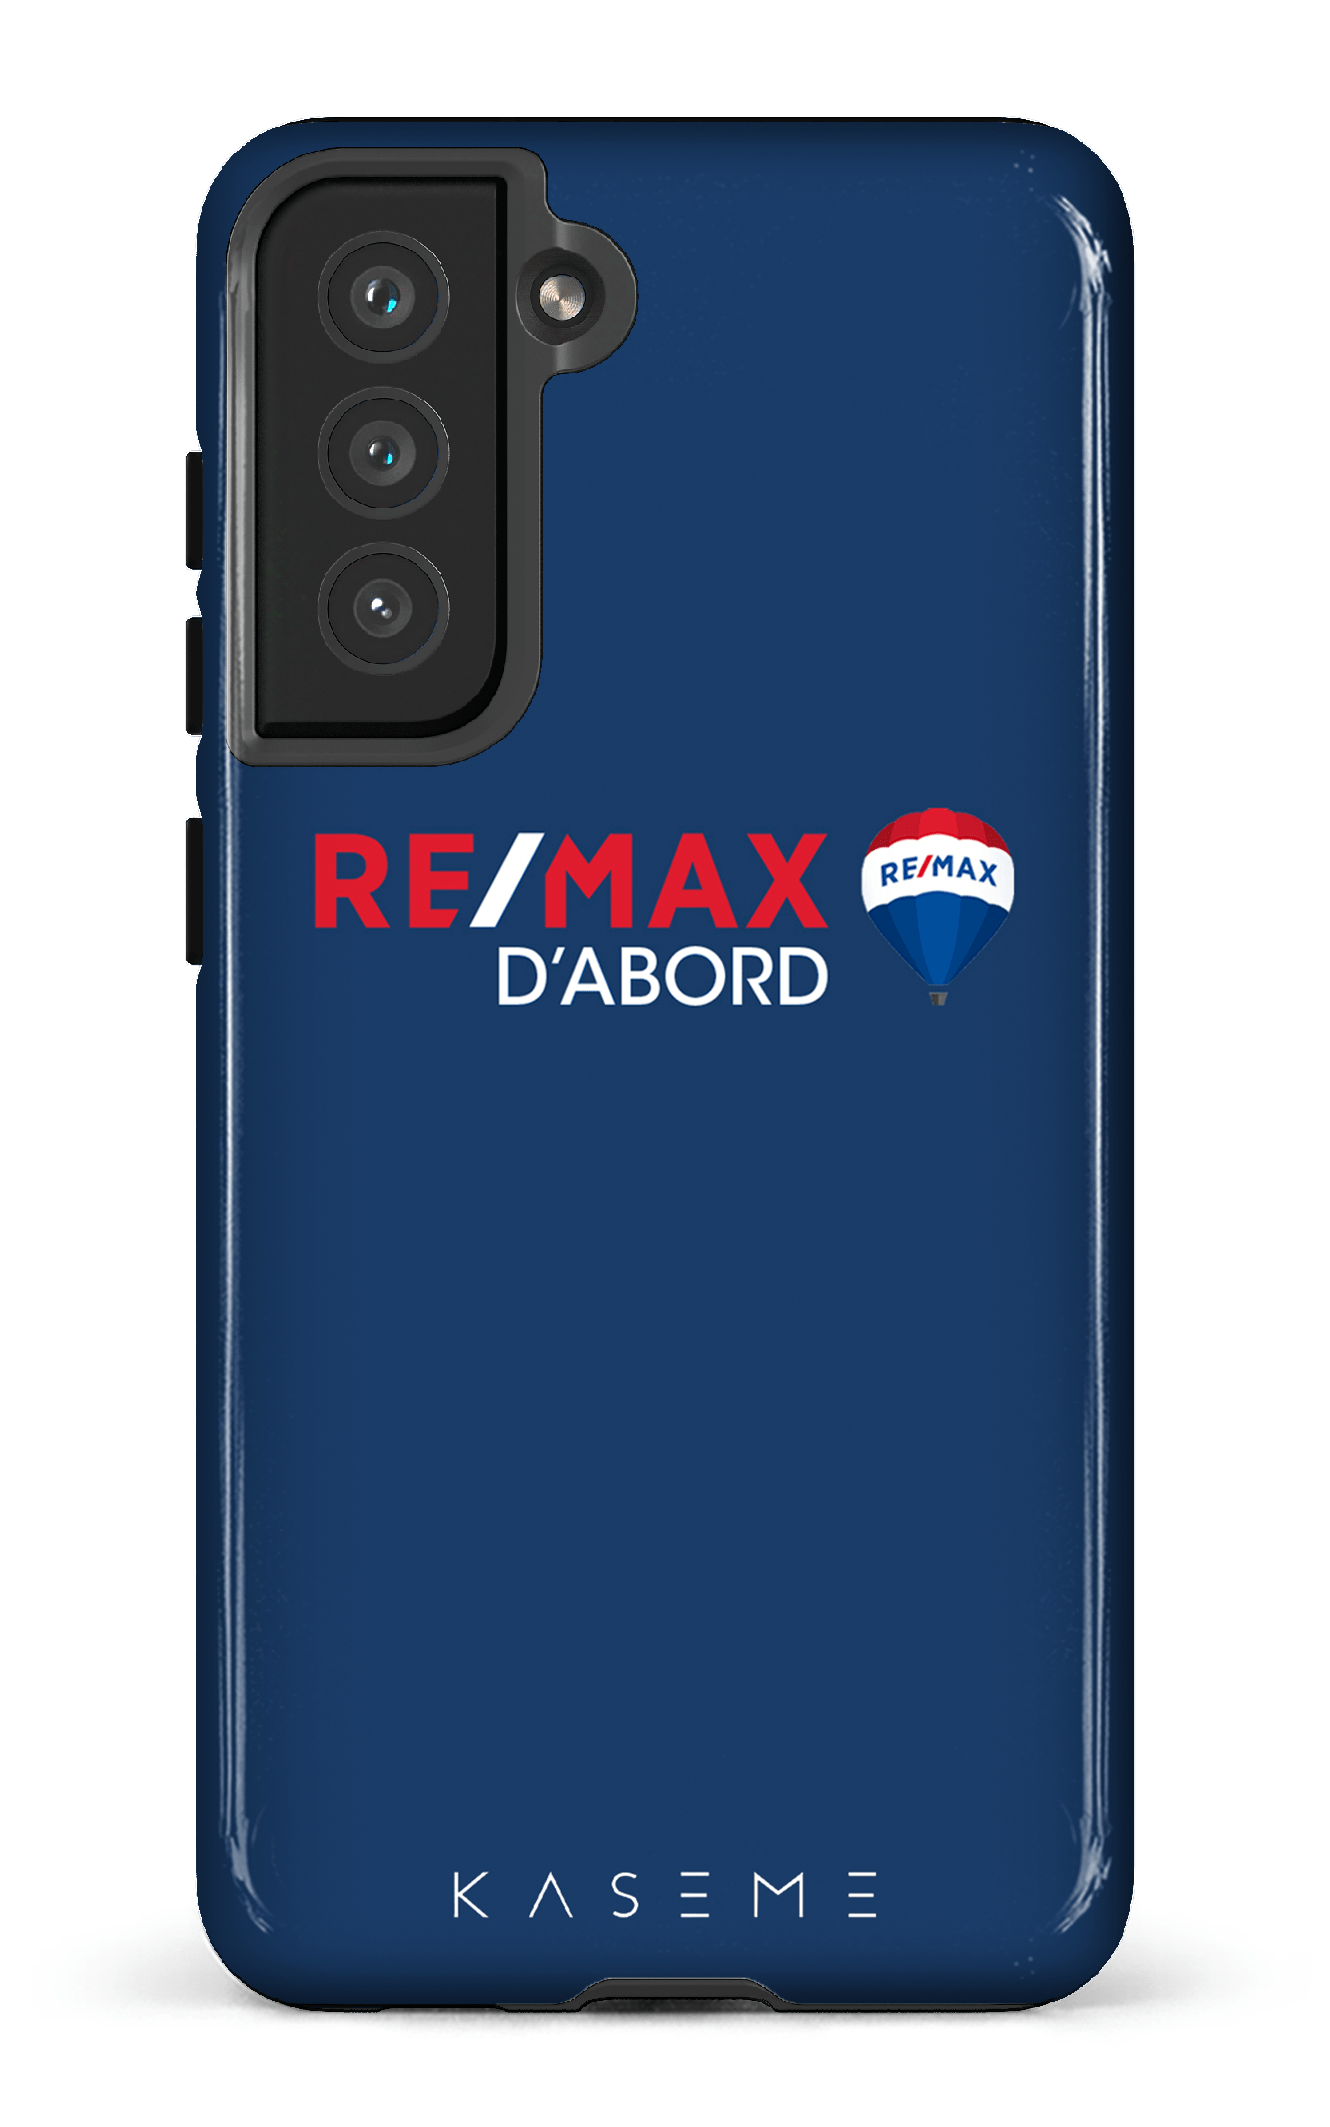 Remax D'abord Bleu - Galaxy S21 FE